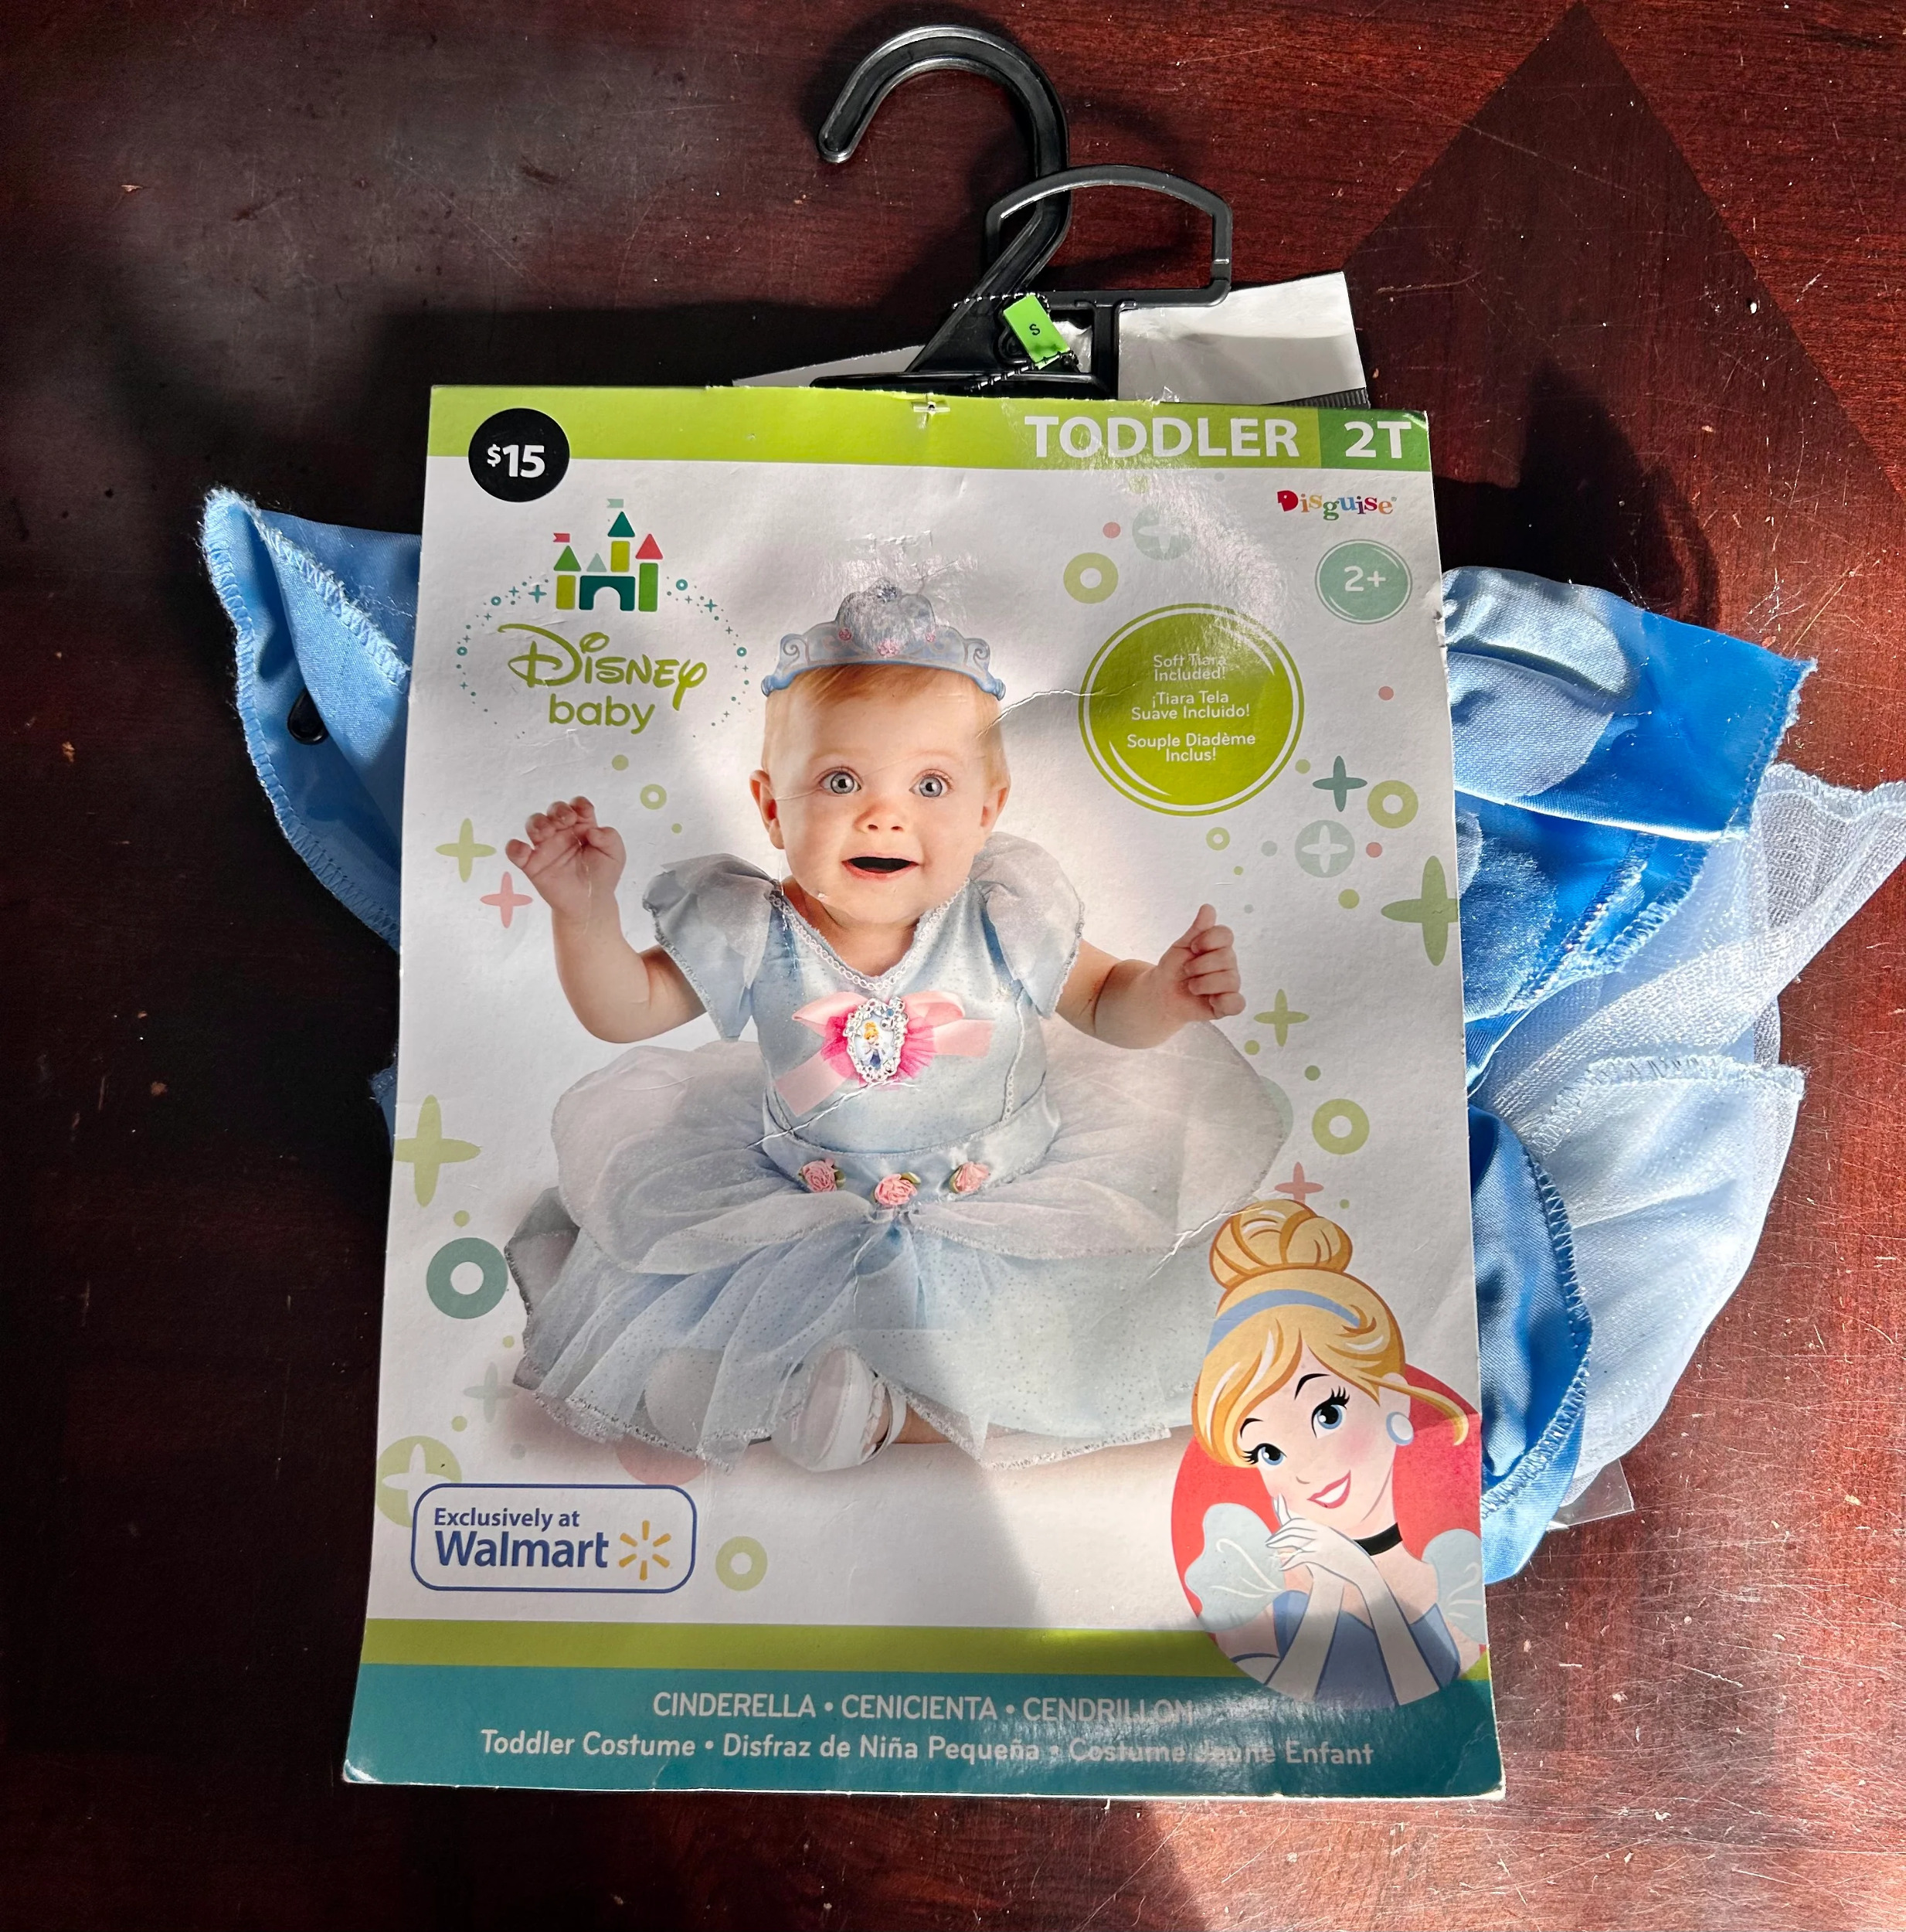 Cinderella Deluxe Toddler Halloween Costume with Headpiece - image 1 of 2